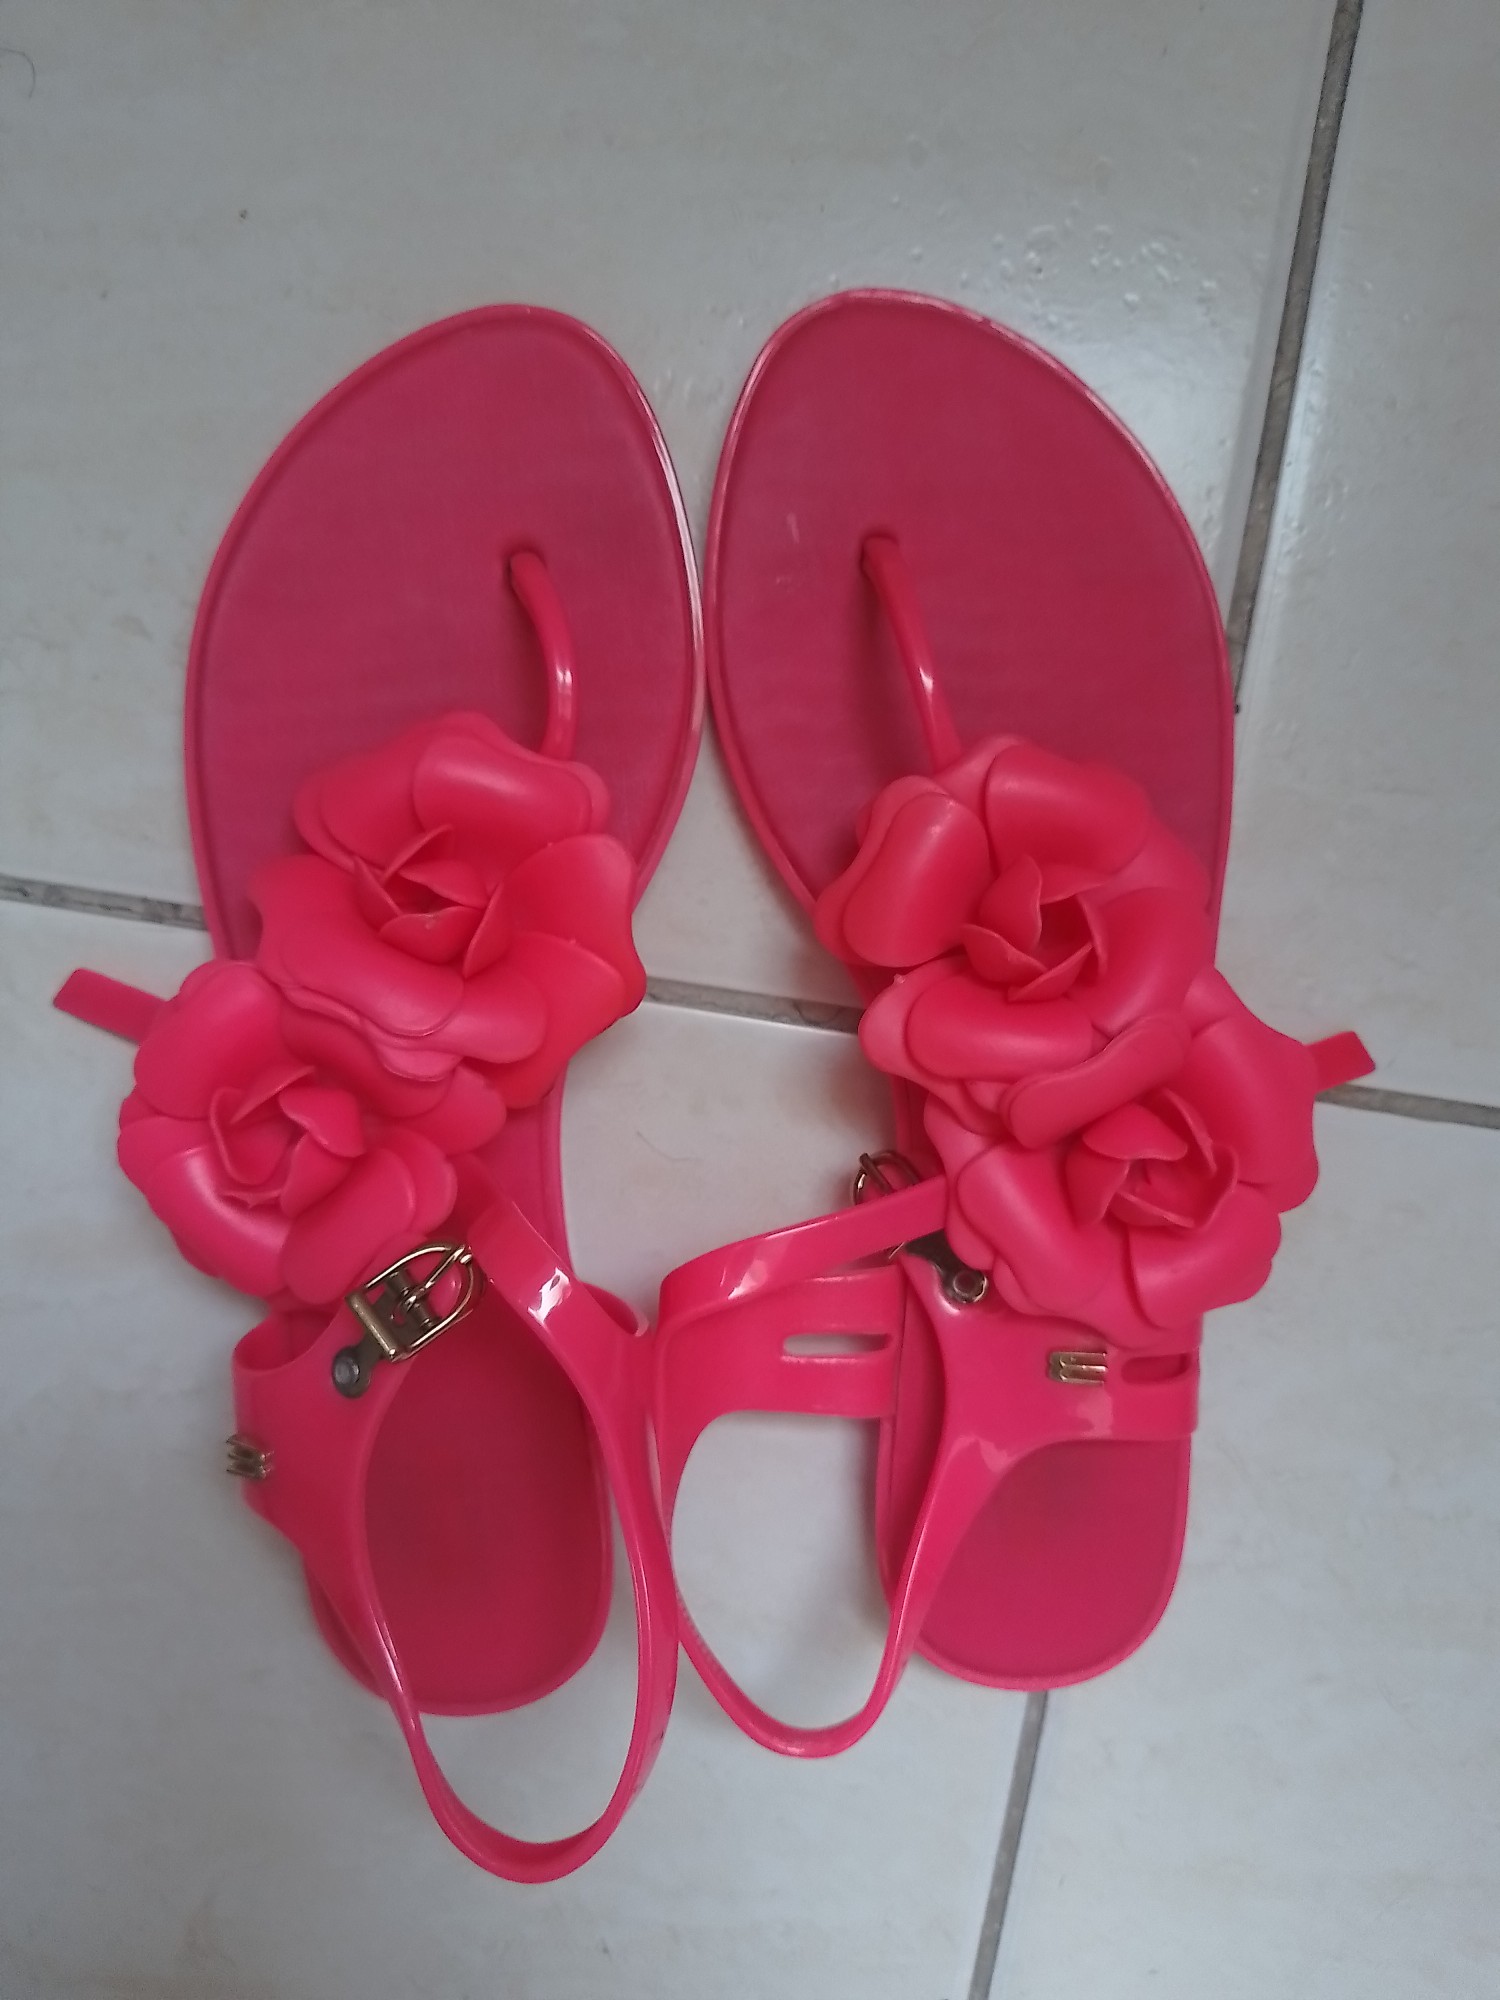 zapatos para mujer - Zapatillas con flores MELISSA size 8 sapatillas color rosa no son marca falsa 3